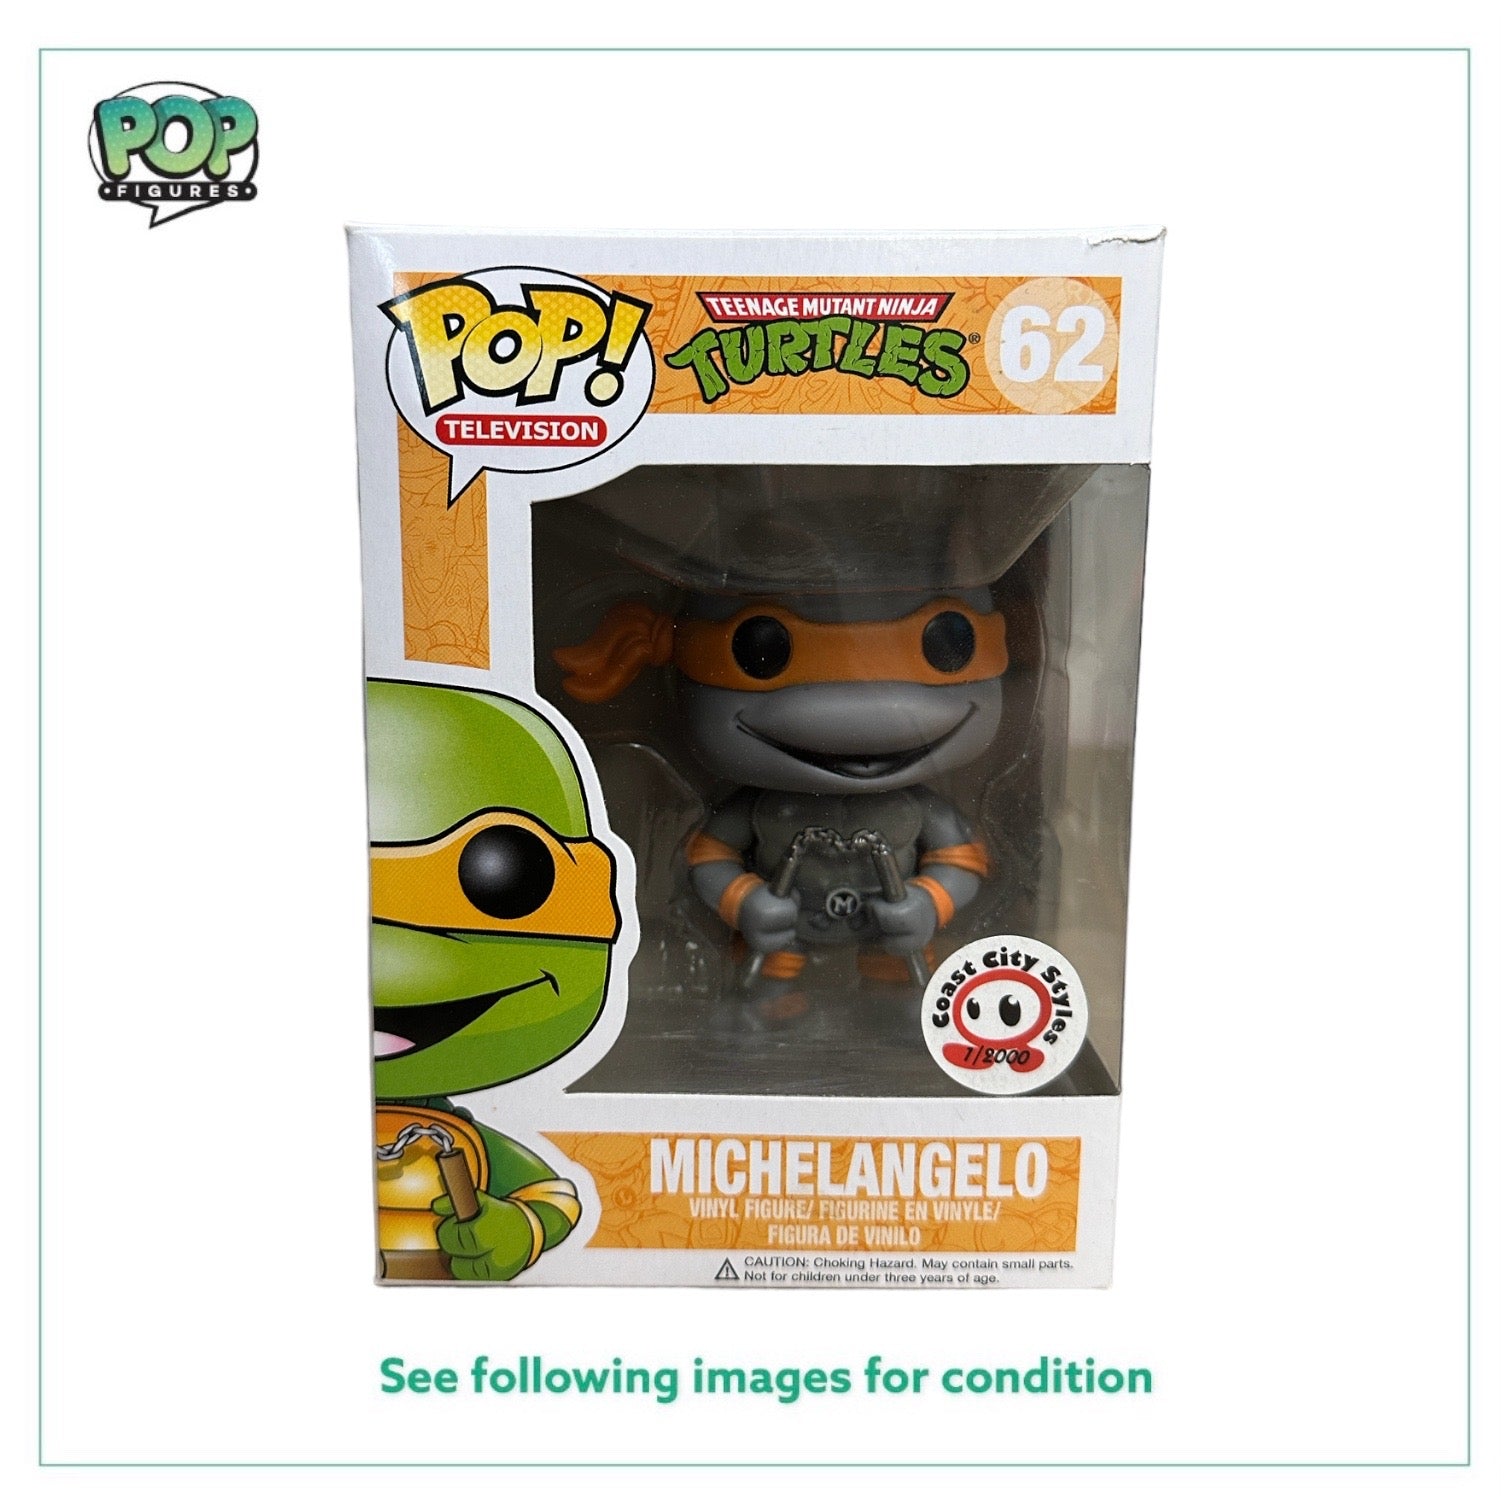 Michelangelo #62 (Grayscale) Funko Pop! - Teenage Mutant Ninja Turtles - Coast City Styles Exclusive LE2000 Pcs - Condition 7/10